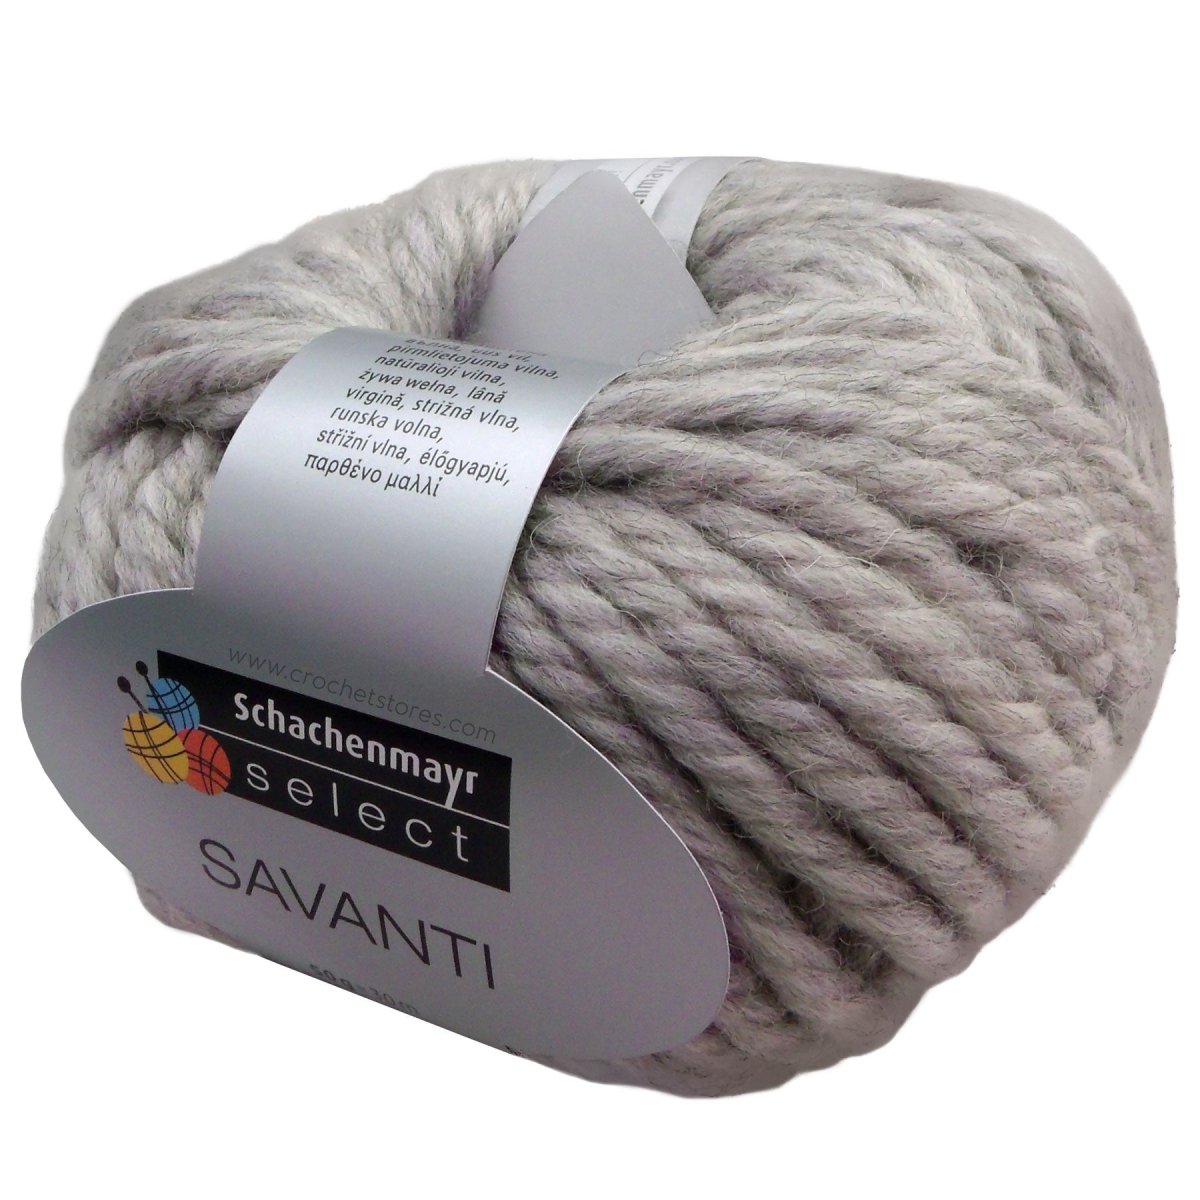 SAVANTI - Crochetstores9811771-47164082700488261